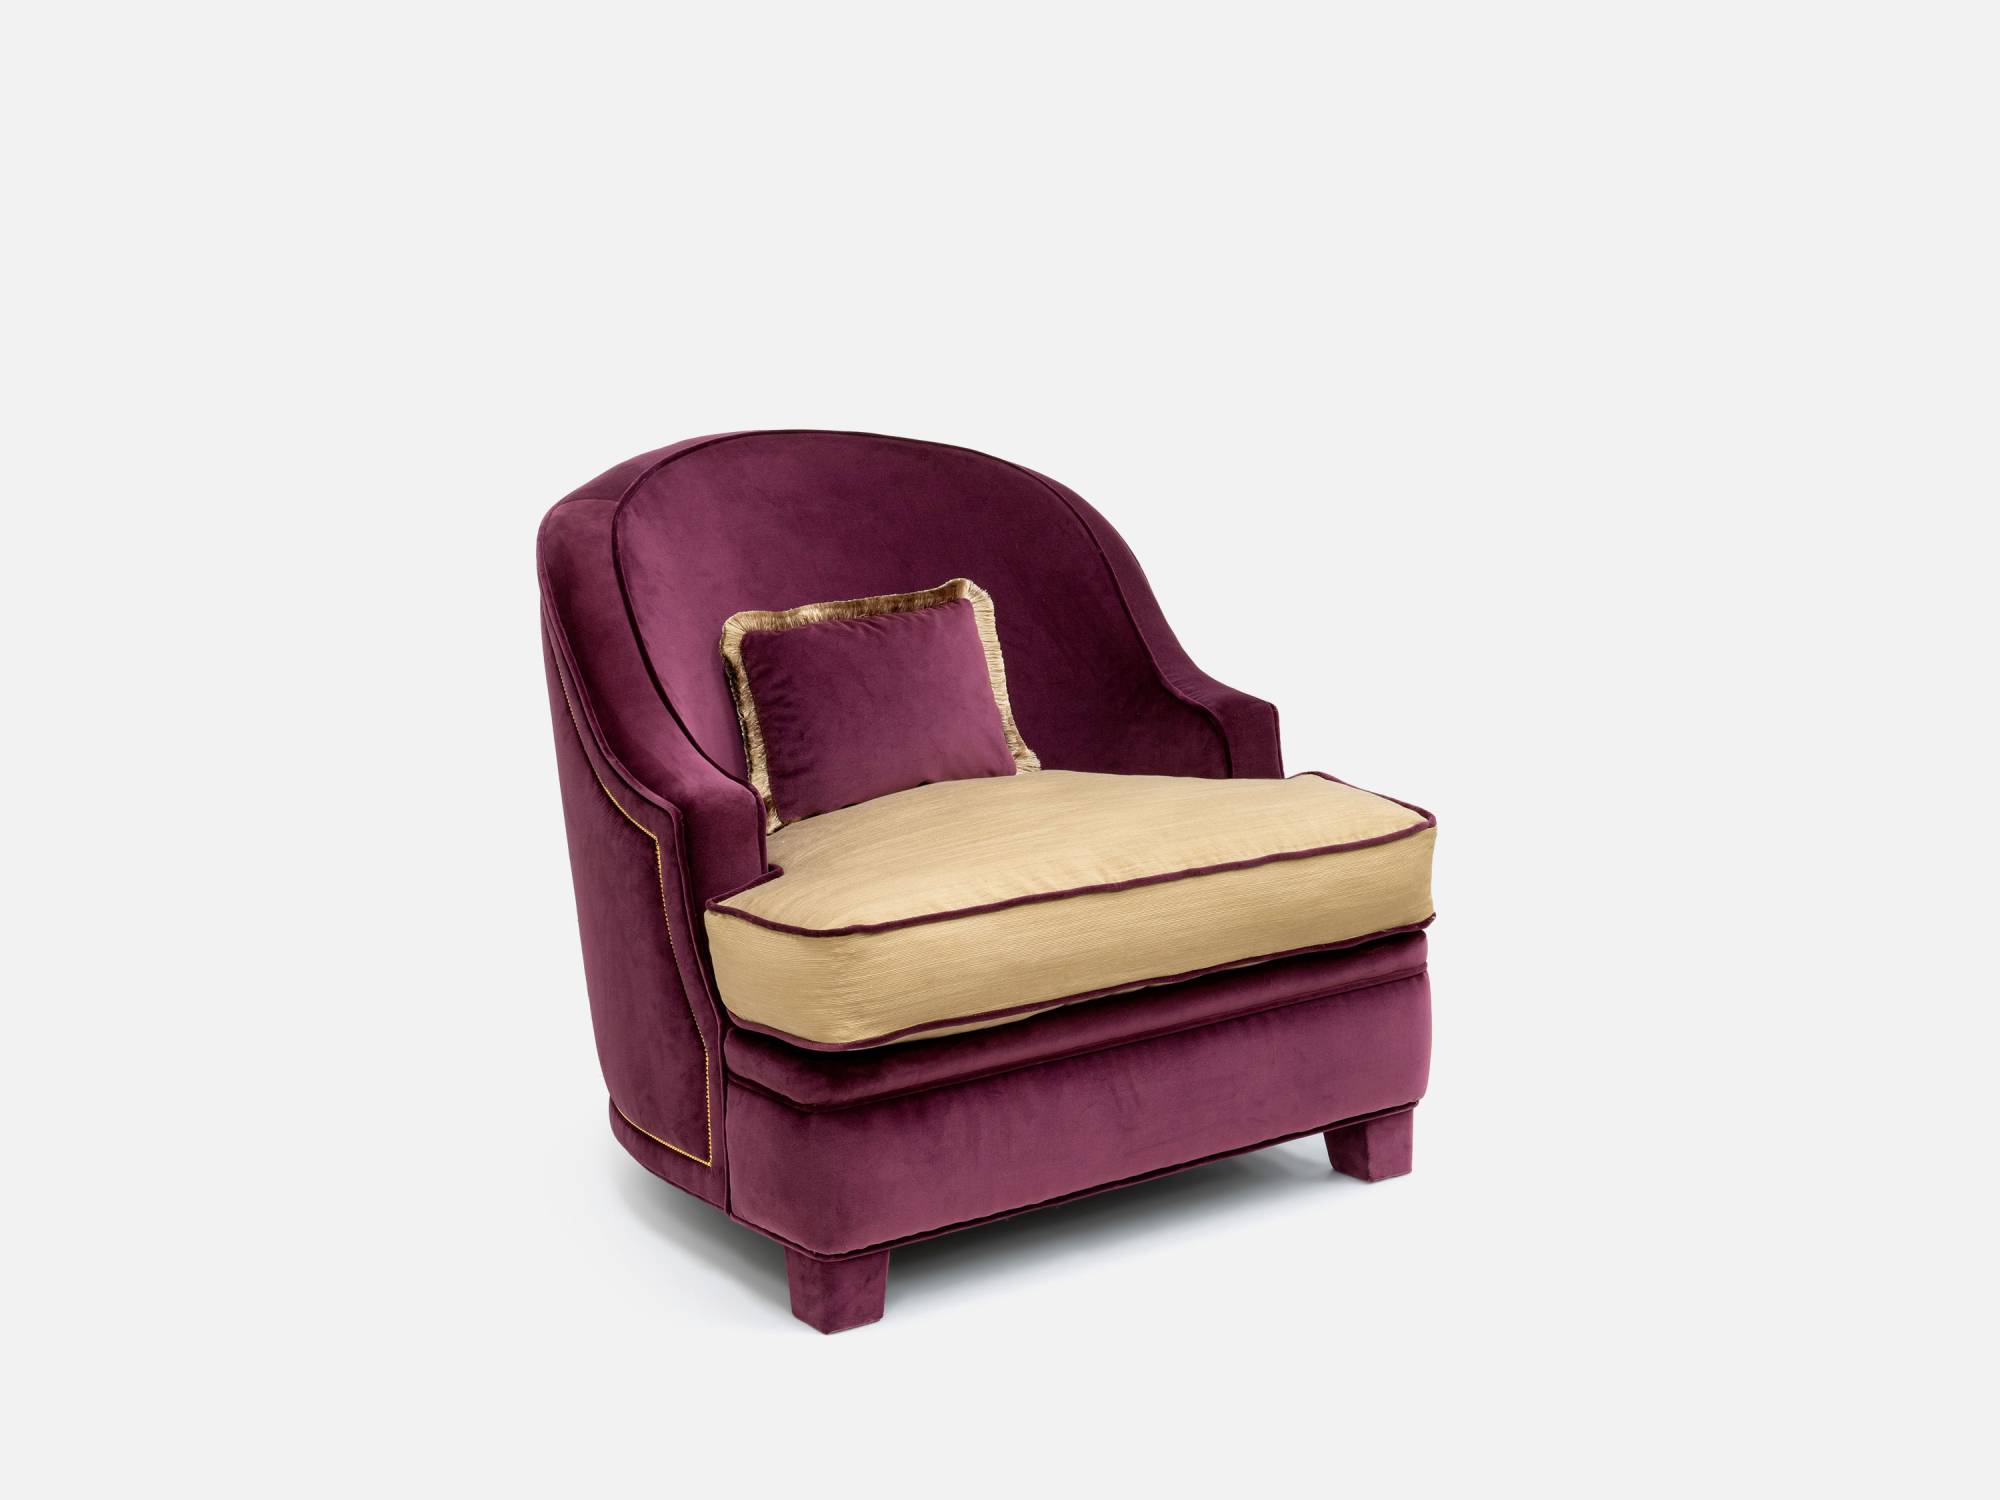 ART. 2295 – C.G. Capelletti Italian Luxury Classic Armchairs. Made in Italy classic interior design